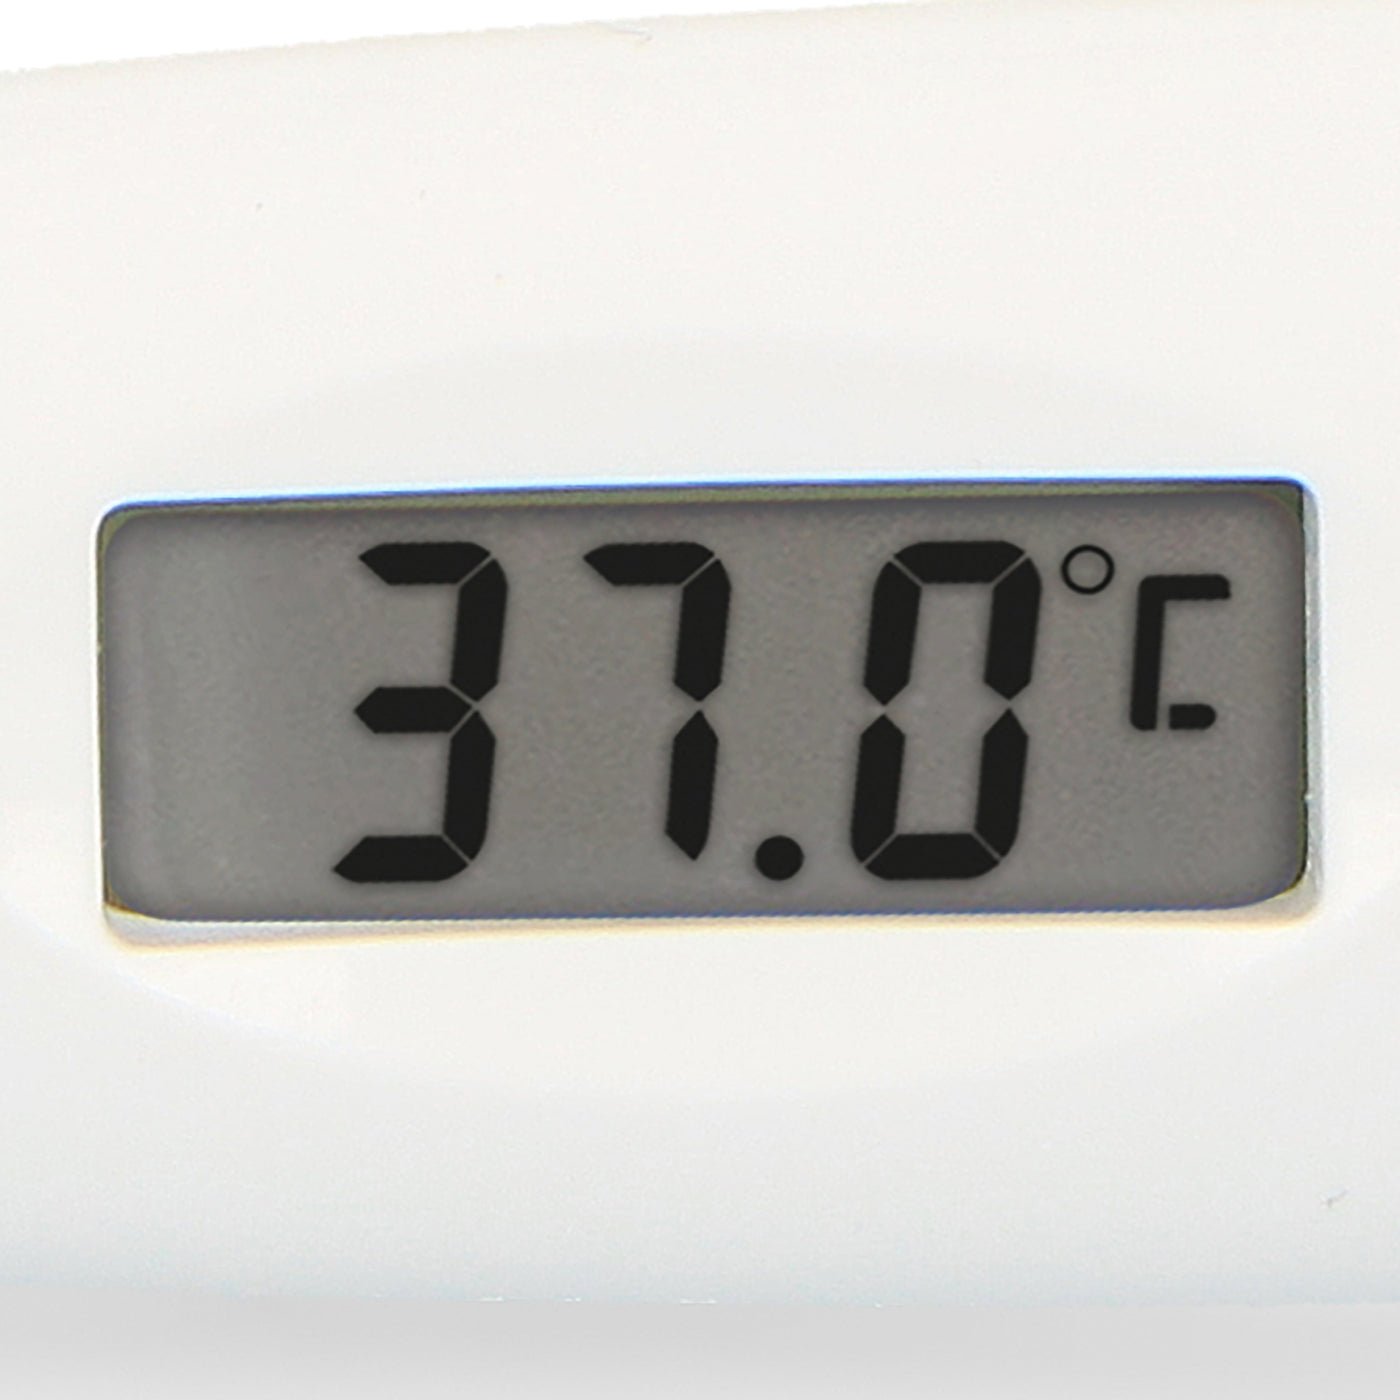 Alecto BC-19GS - Digital thermometer, gray